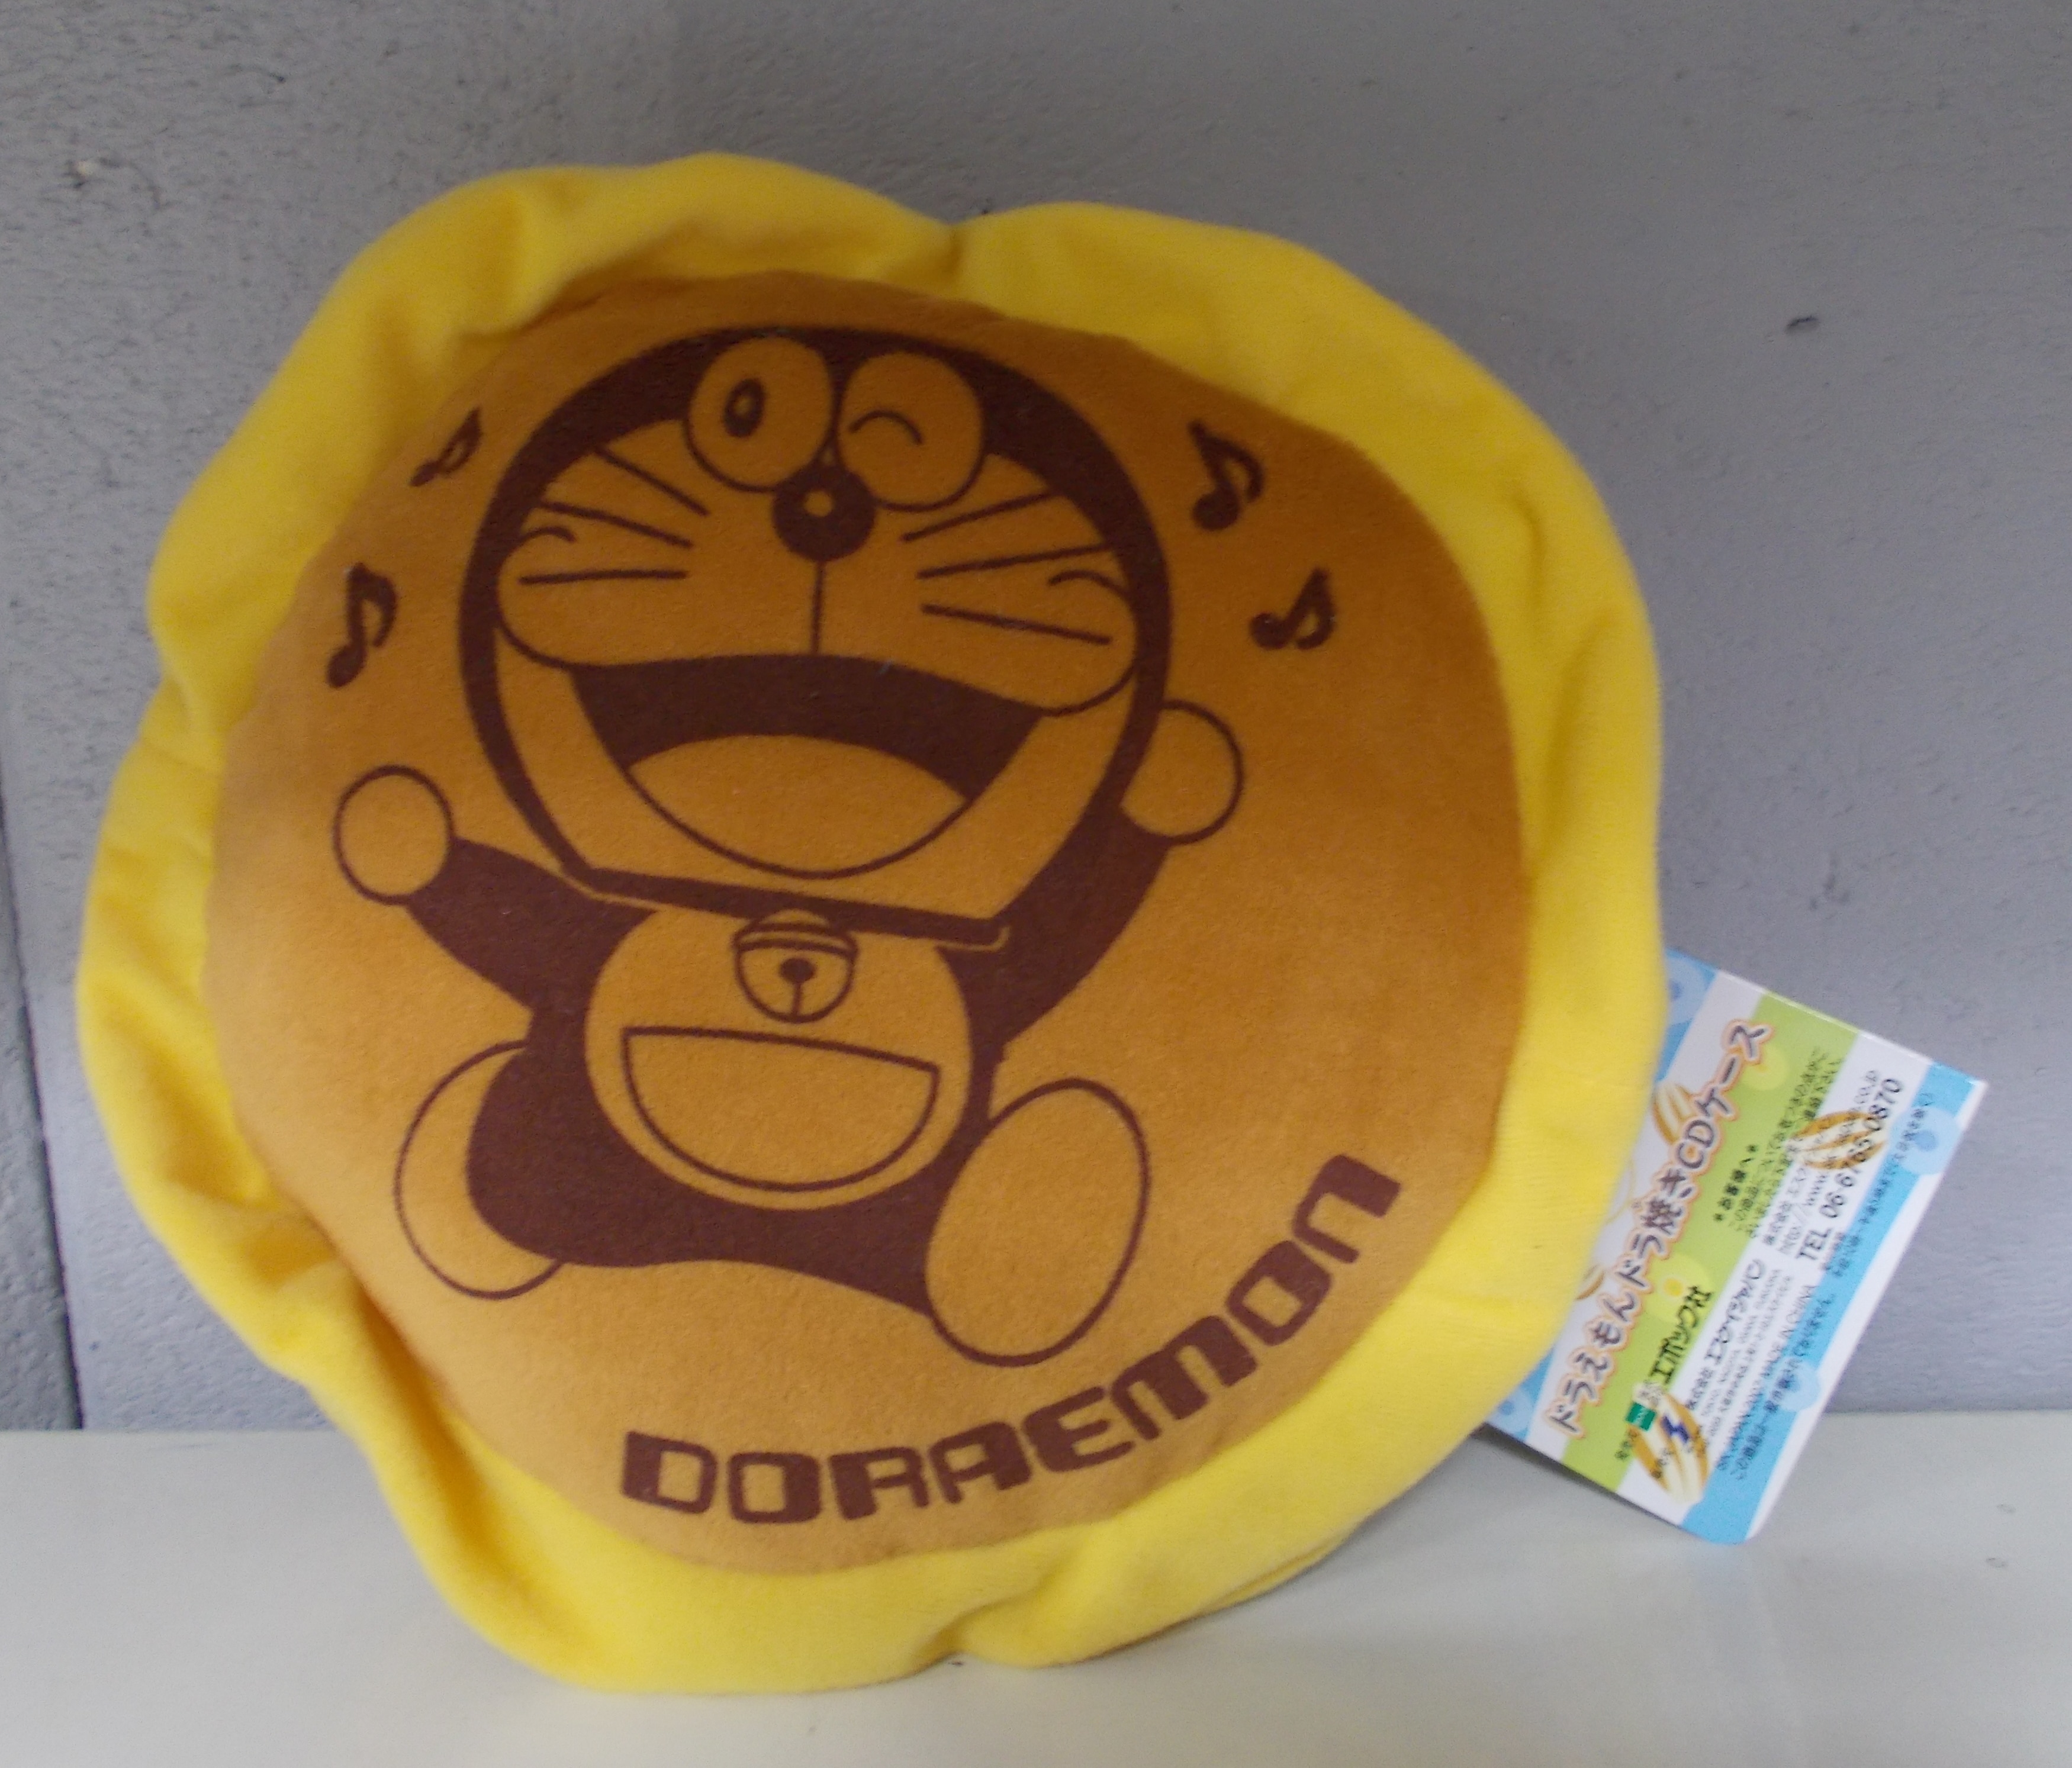 Epoch Company Doraemon Dorayaki Cd Case Mandarake Online Shop